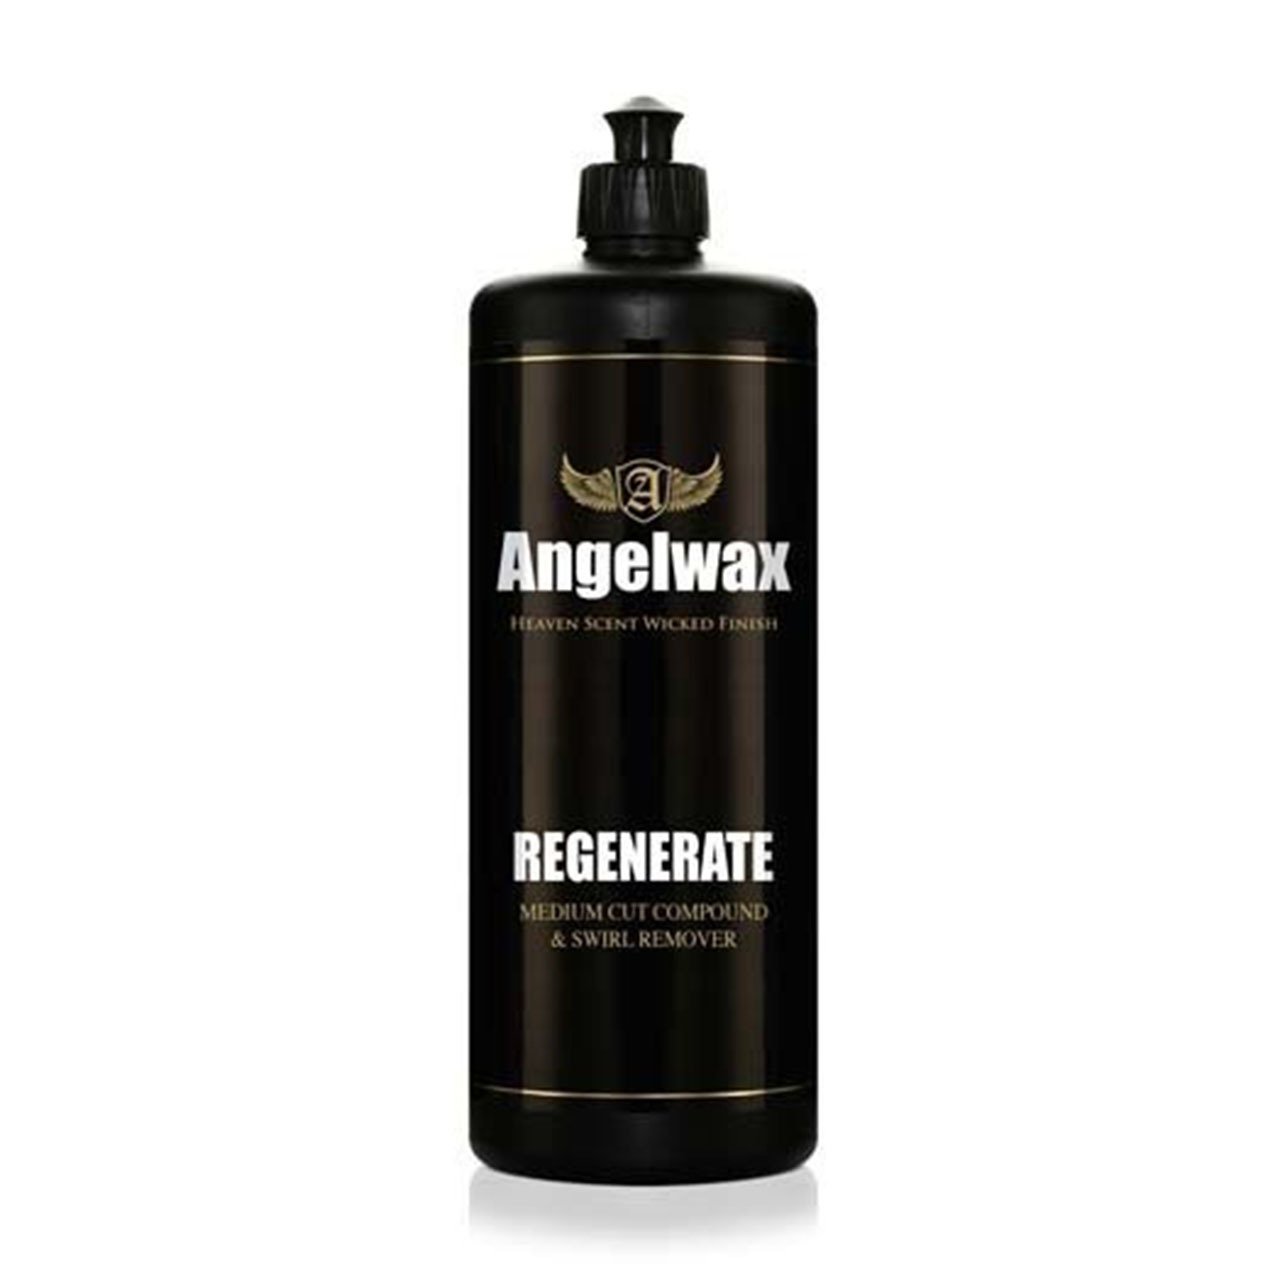 Angelwax Regenerate Medium Cut Compound 500ml / İnce Pasta